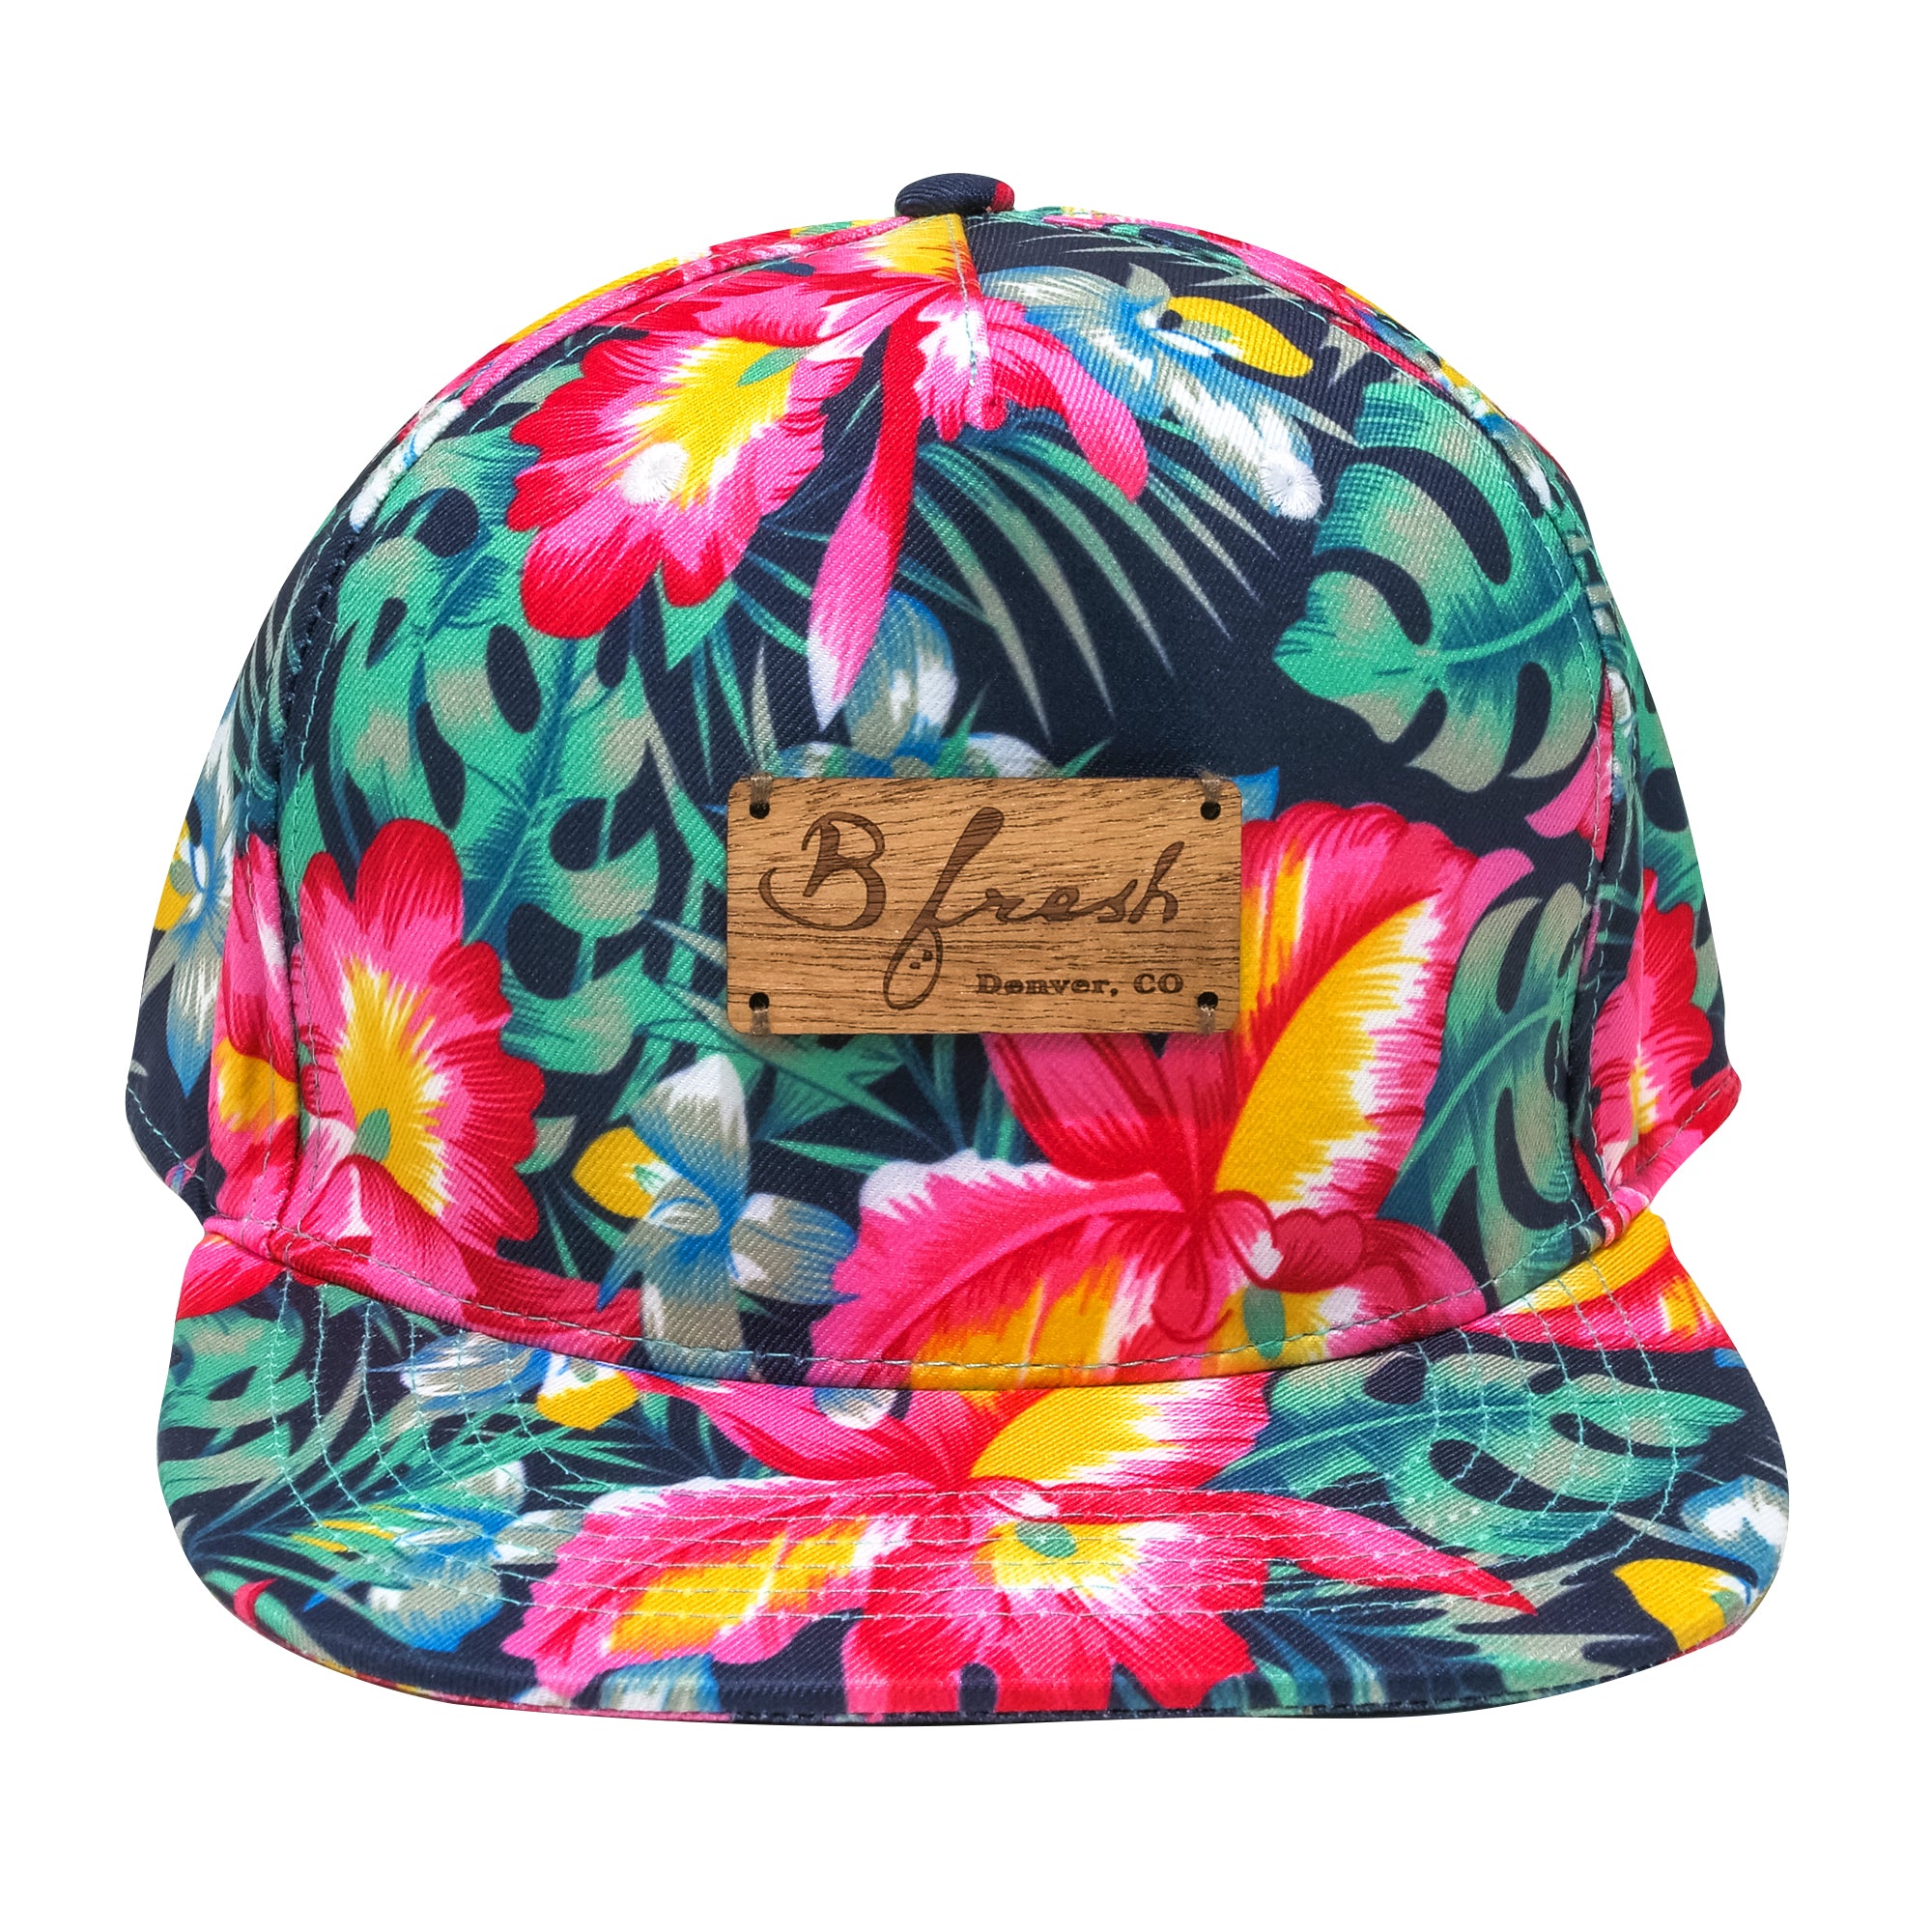 Magnum P.I Hawaii 5.0 Floral Florida Miami Tropical 80s Flat Bill Hat Snapback. B Fresh Gear.